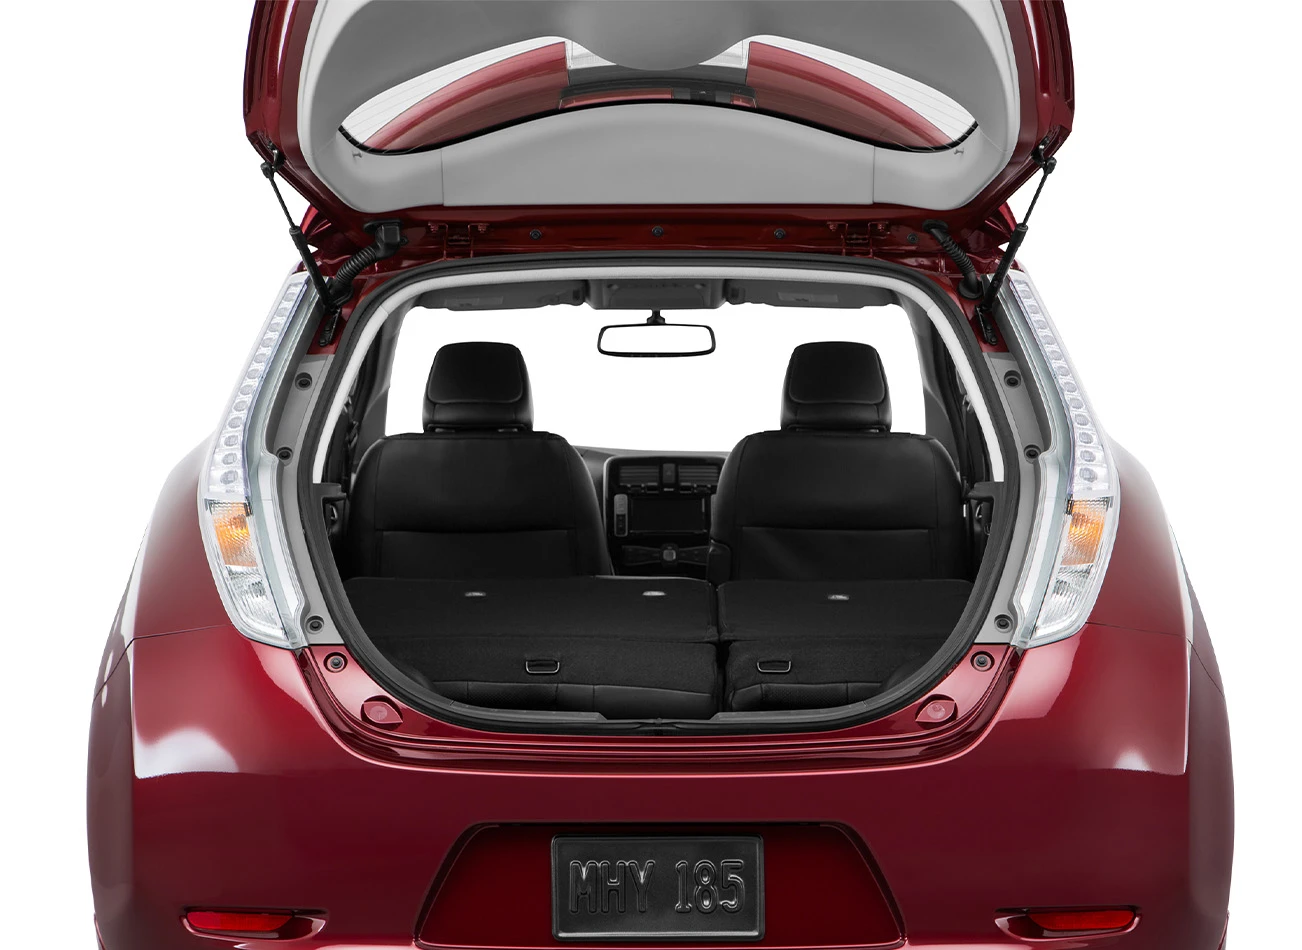 2017 Nissan Leaf Review: Cargo | CarMax